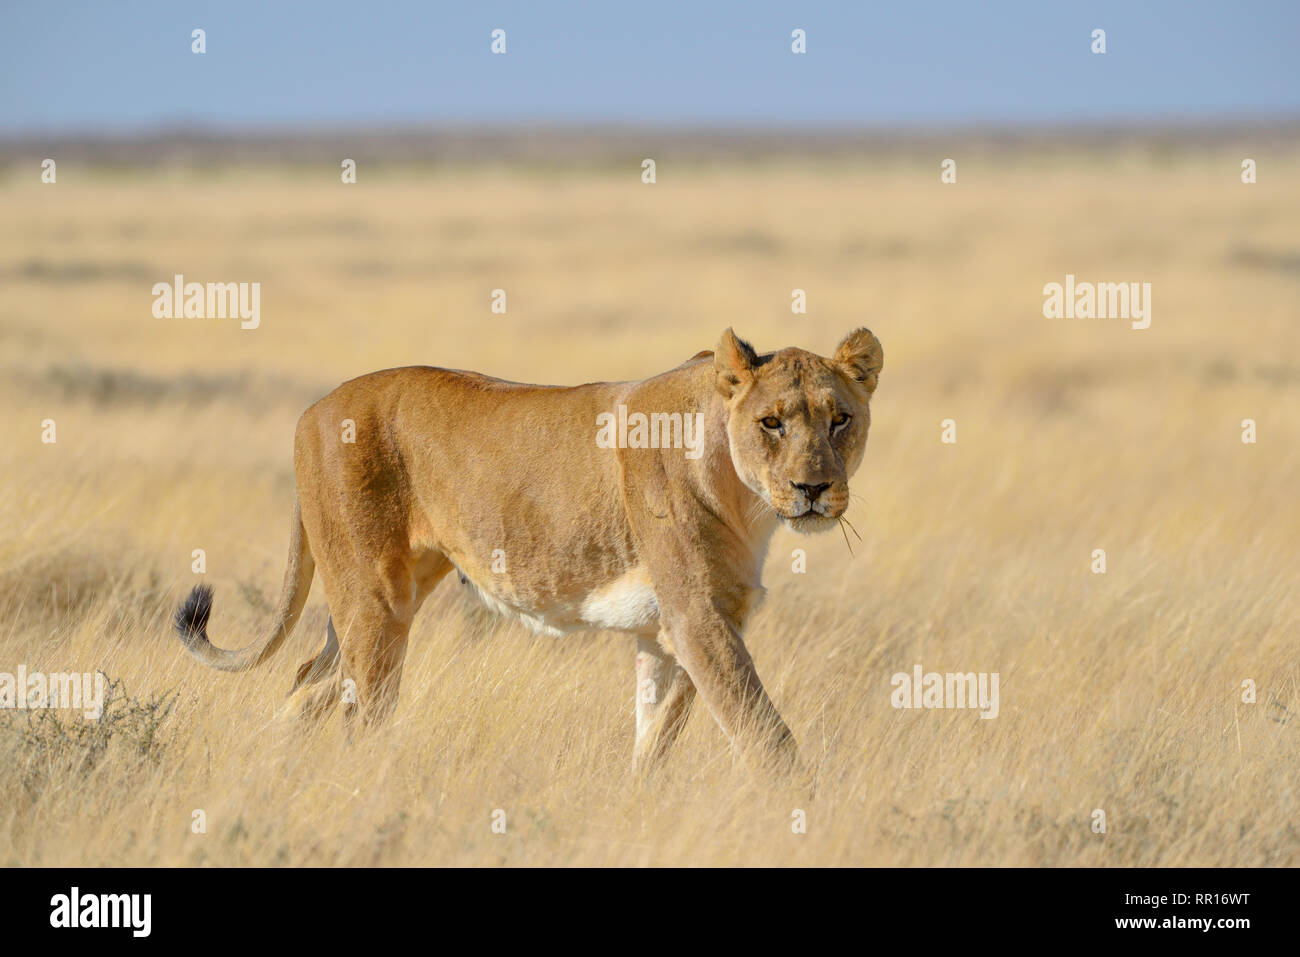 Zoologie, Säugetiere (Mammalia), Löwe (Panthera leo), weibliche Tier, Etosha National Park, Namibia, Additional-Rights - Clearance-Info - Not-Available Stockfoto